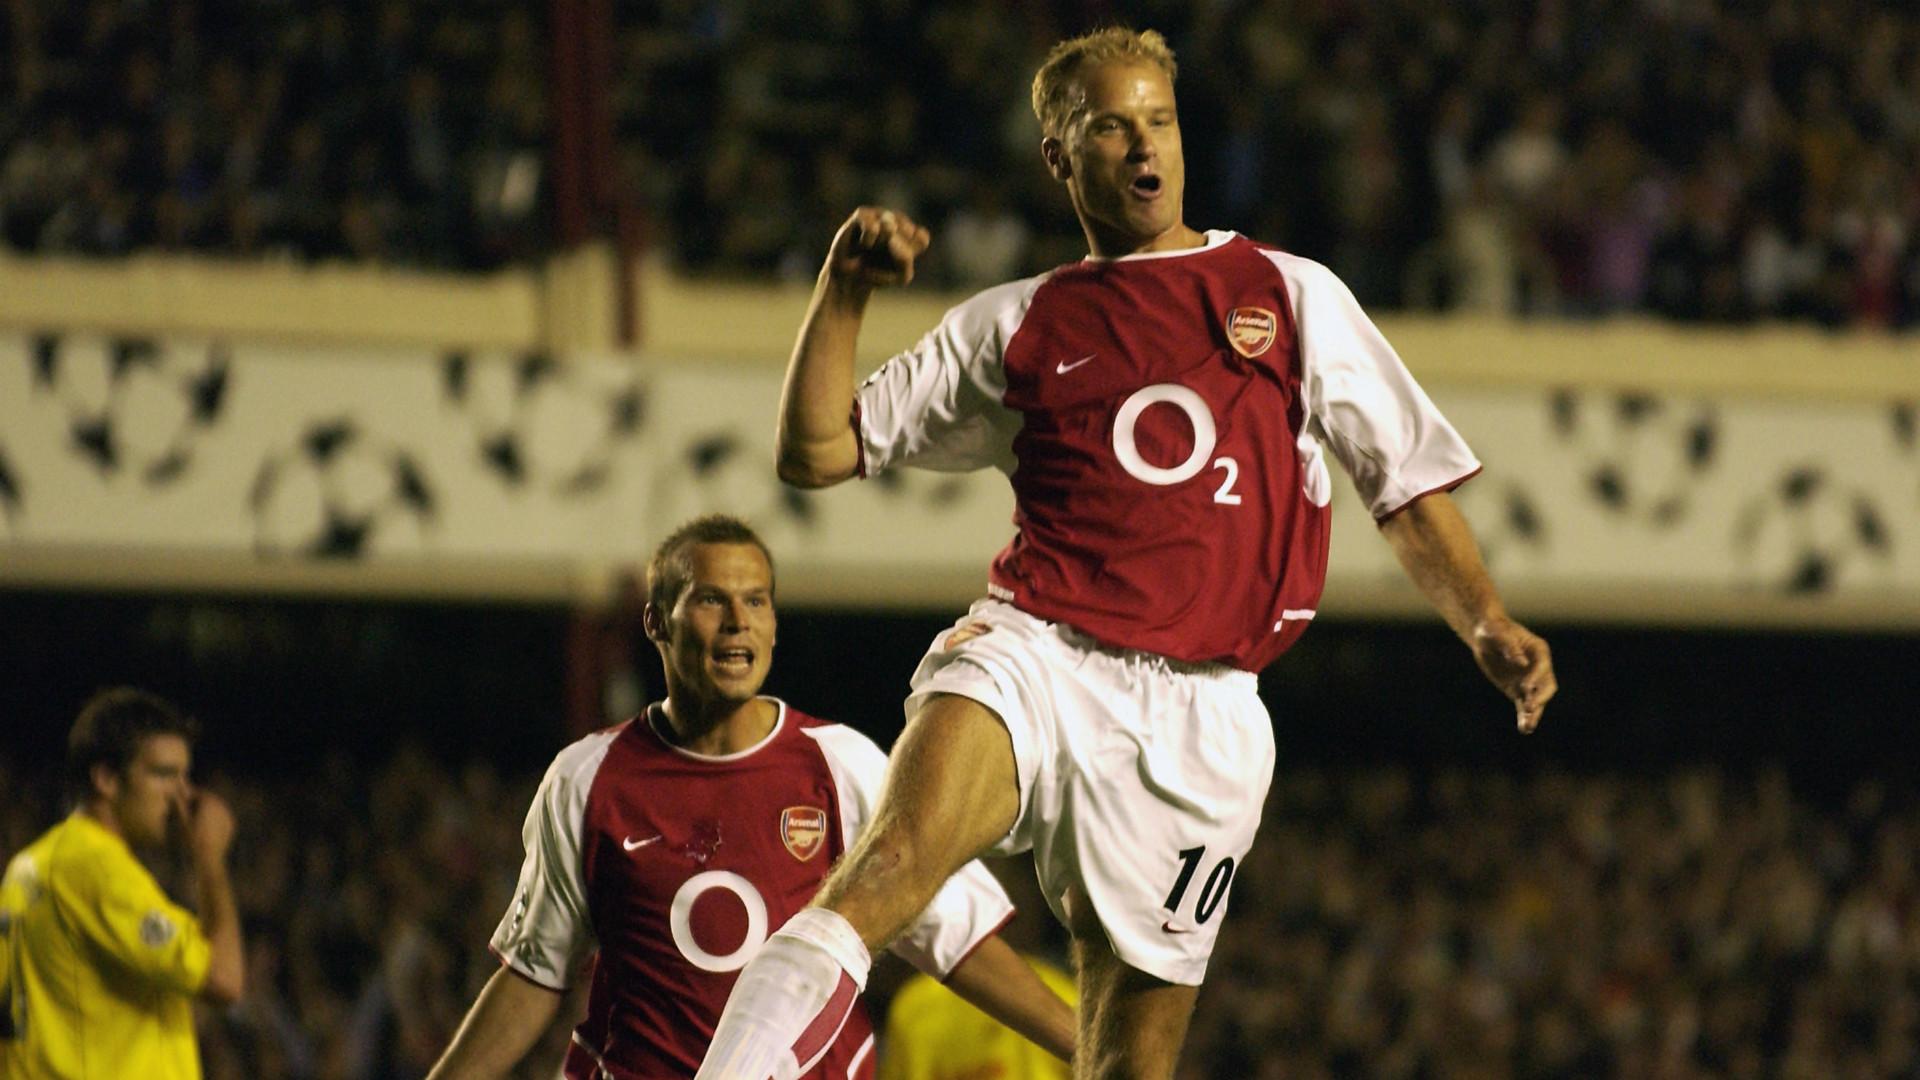 Dennis Bergkamp | Arsenal - Goal.com1920 x 1080